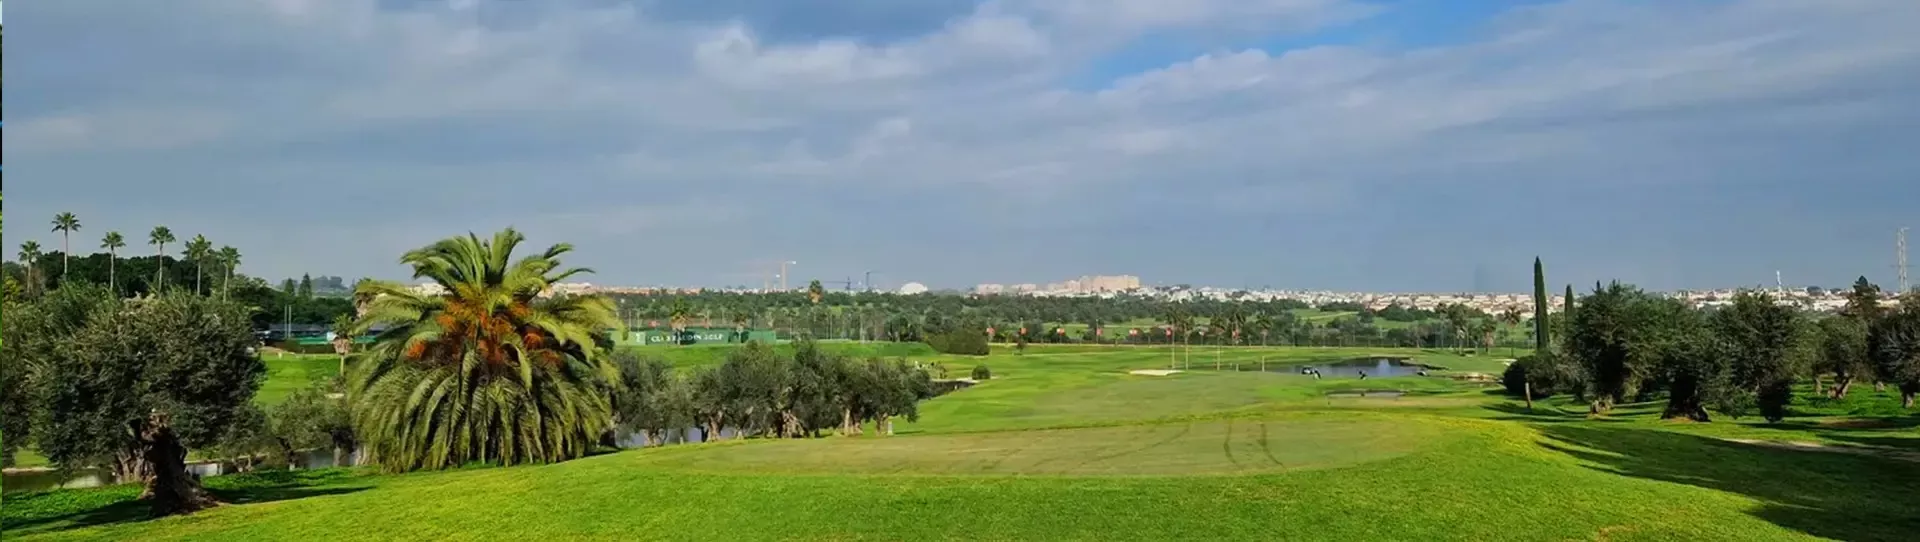 Spain golf courses - Club de Golf Zaudin - Photo 2